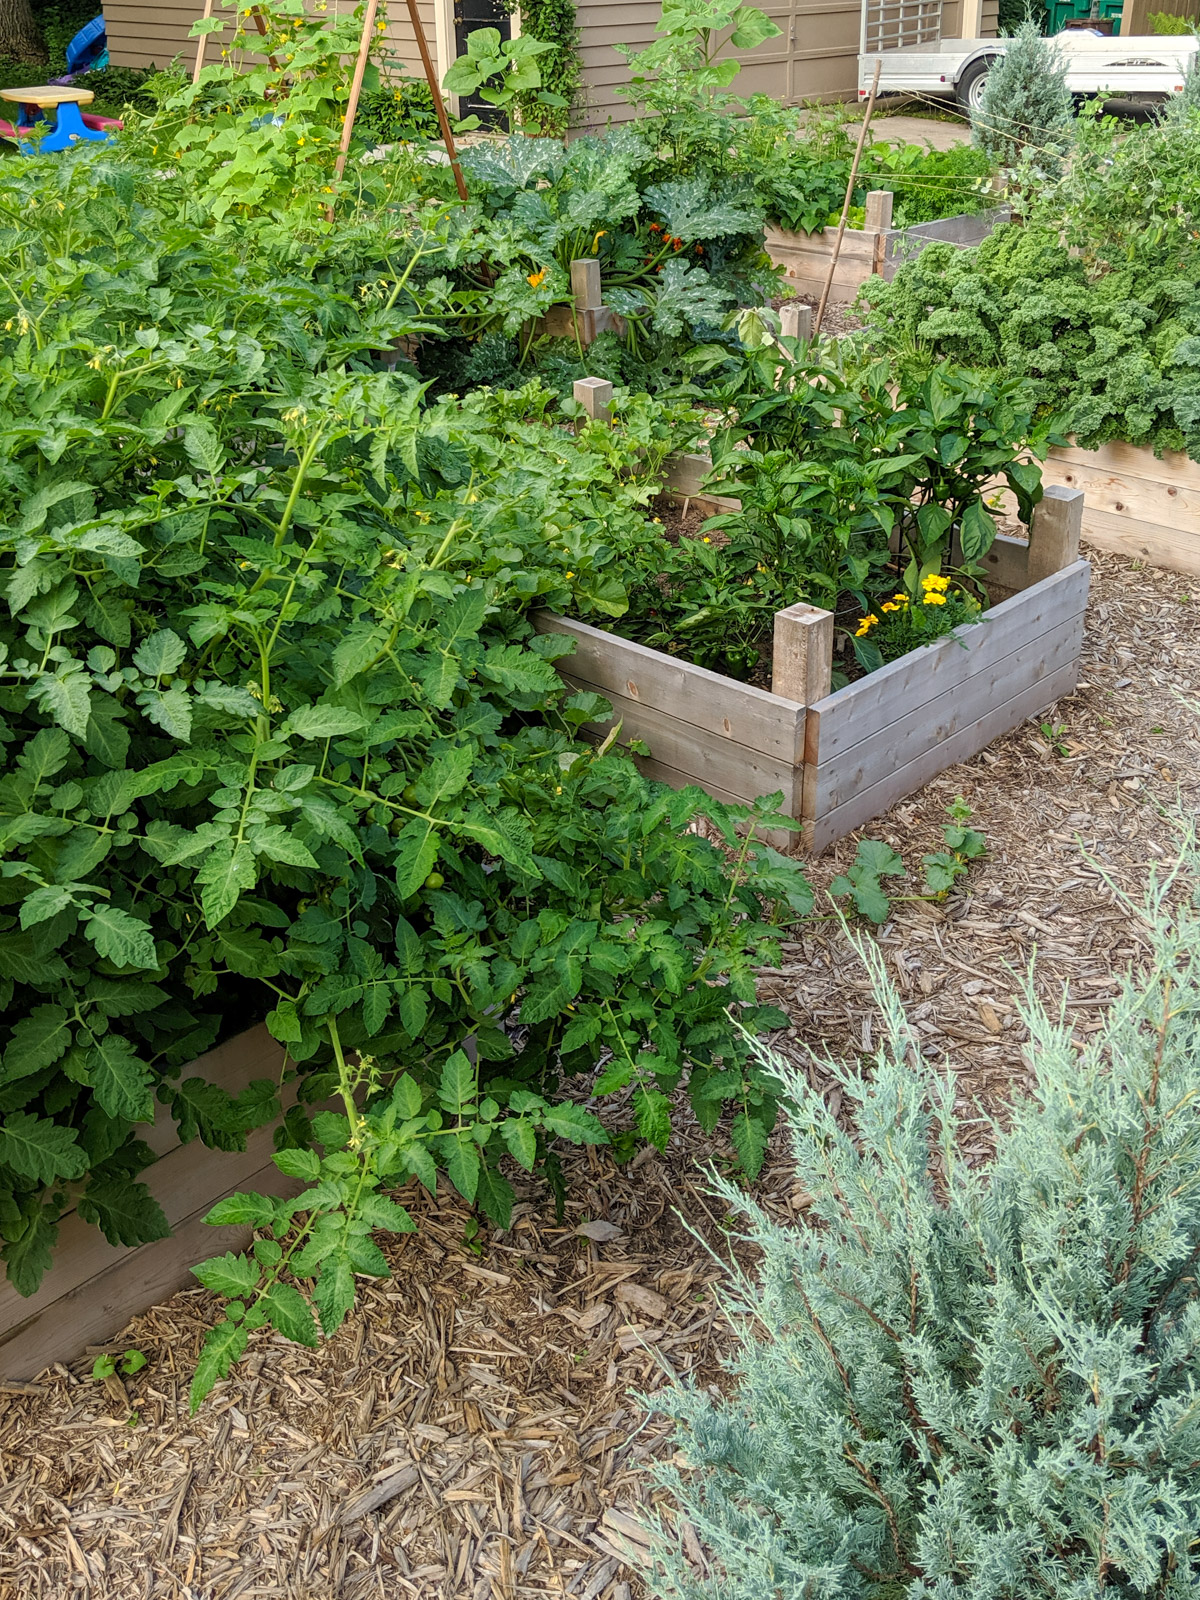 Garden beds full of vegetable plants.